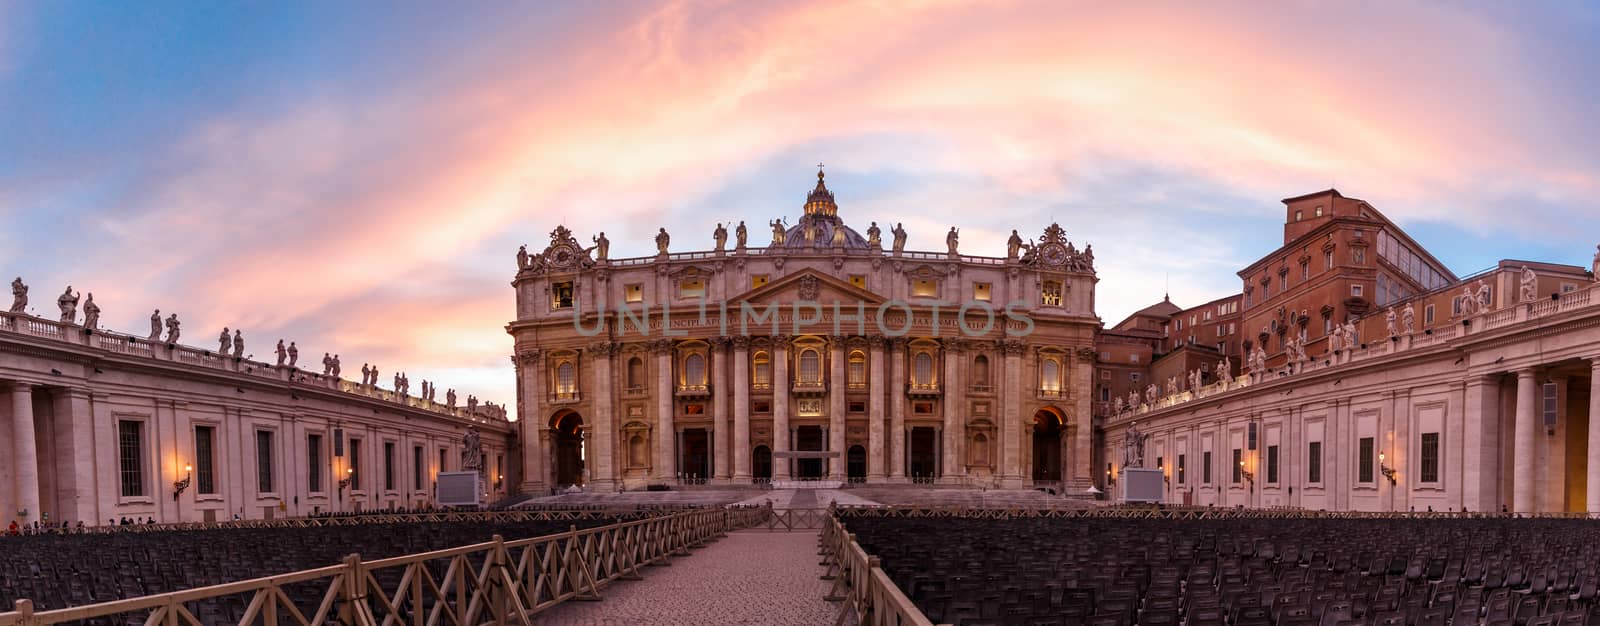 San Pietro Basilica View by niglaynike